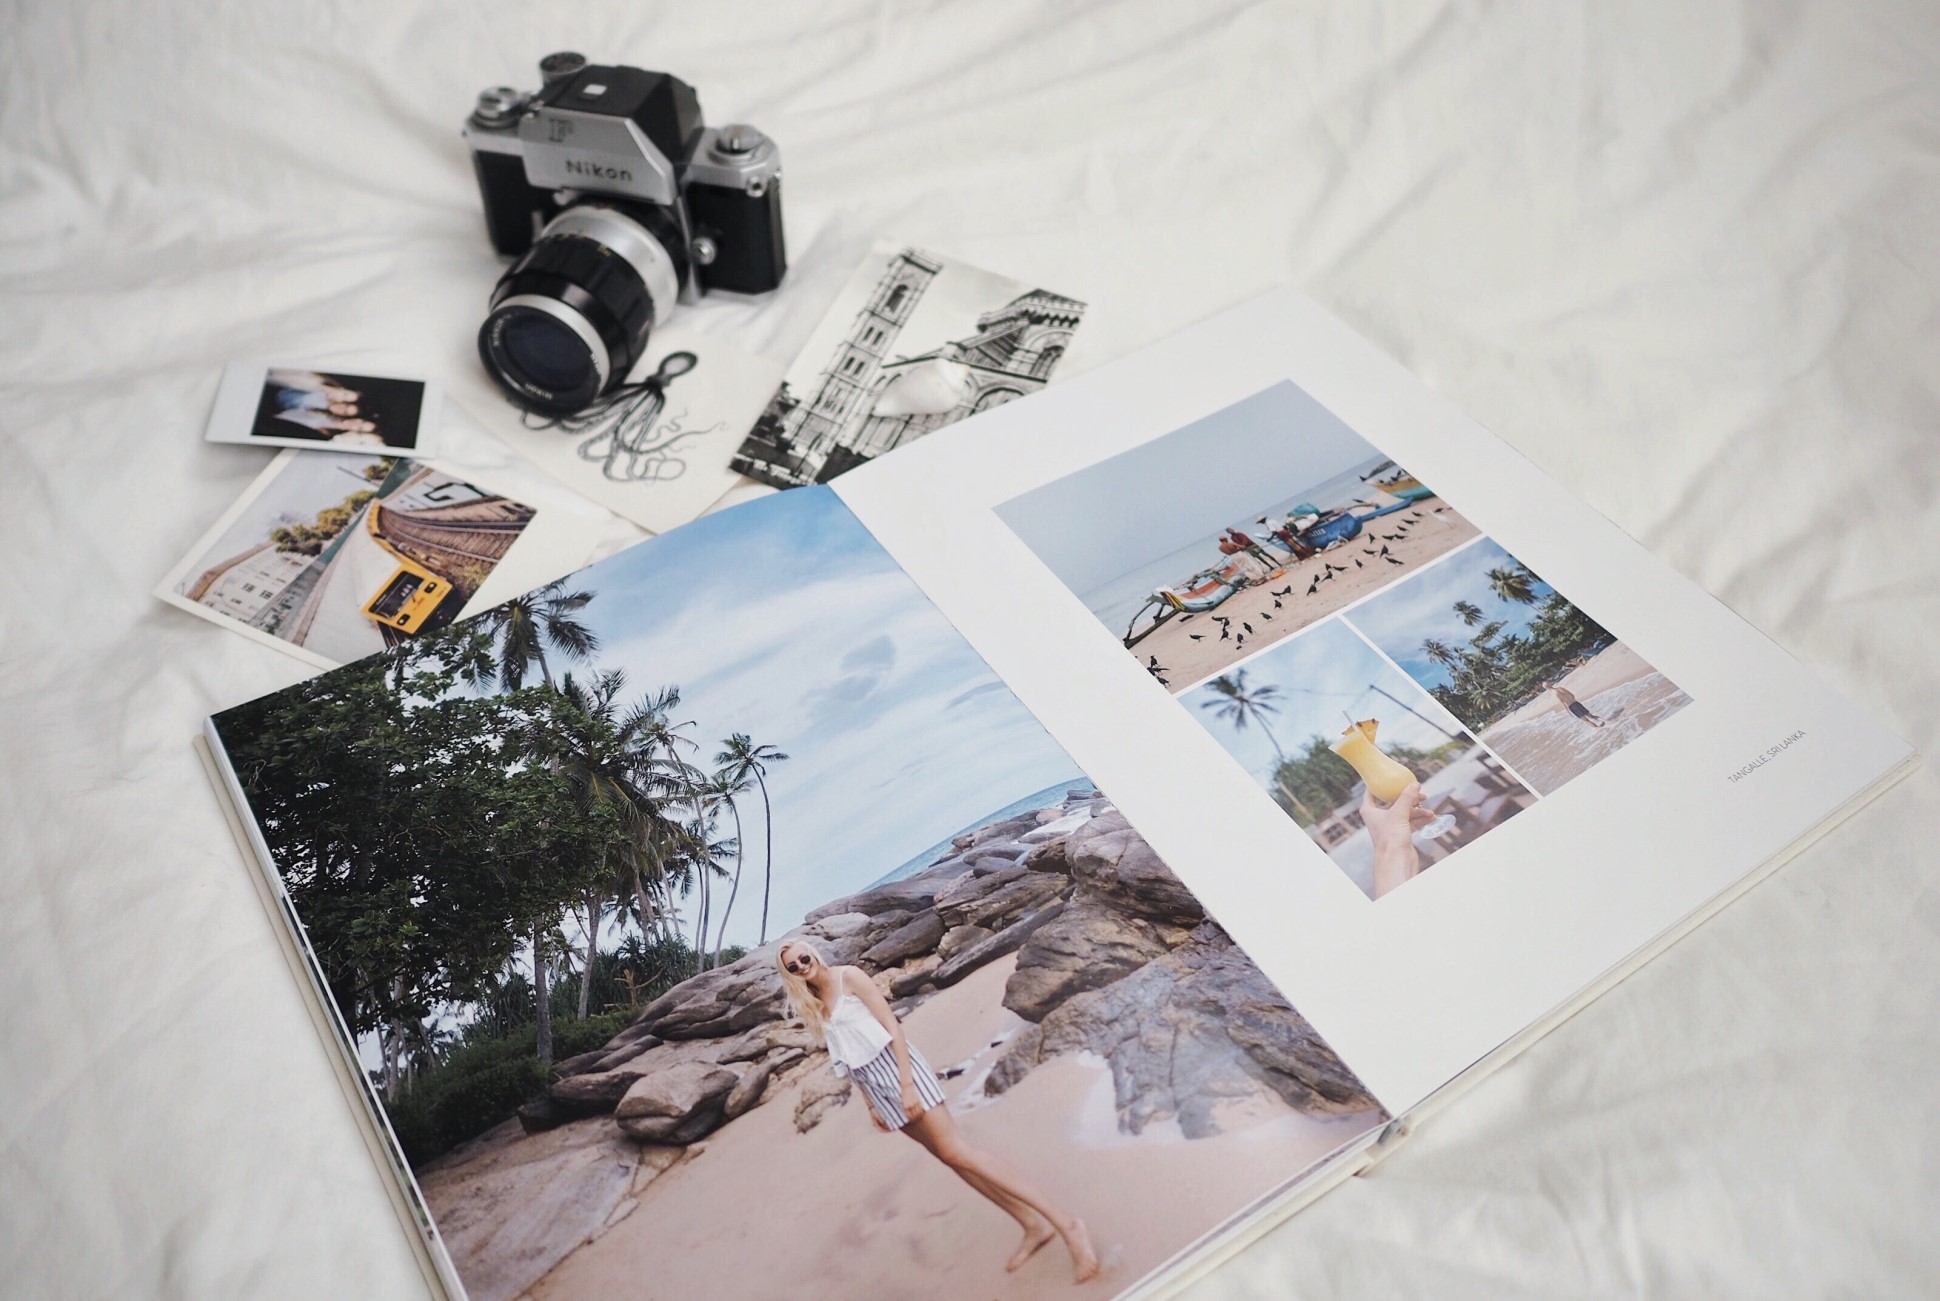 Flatlay of photobook, camera and sketches